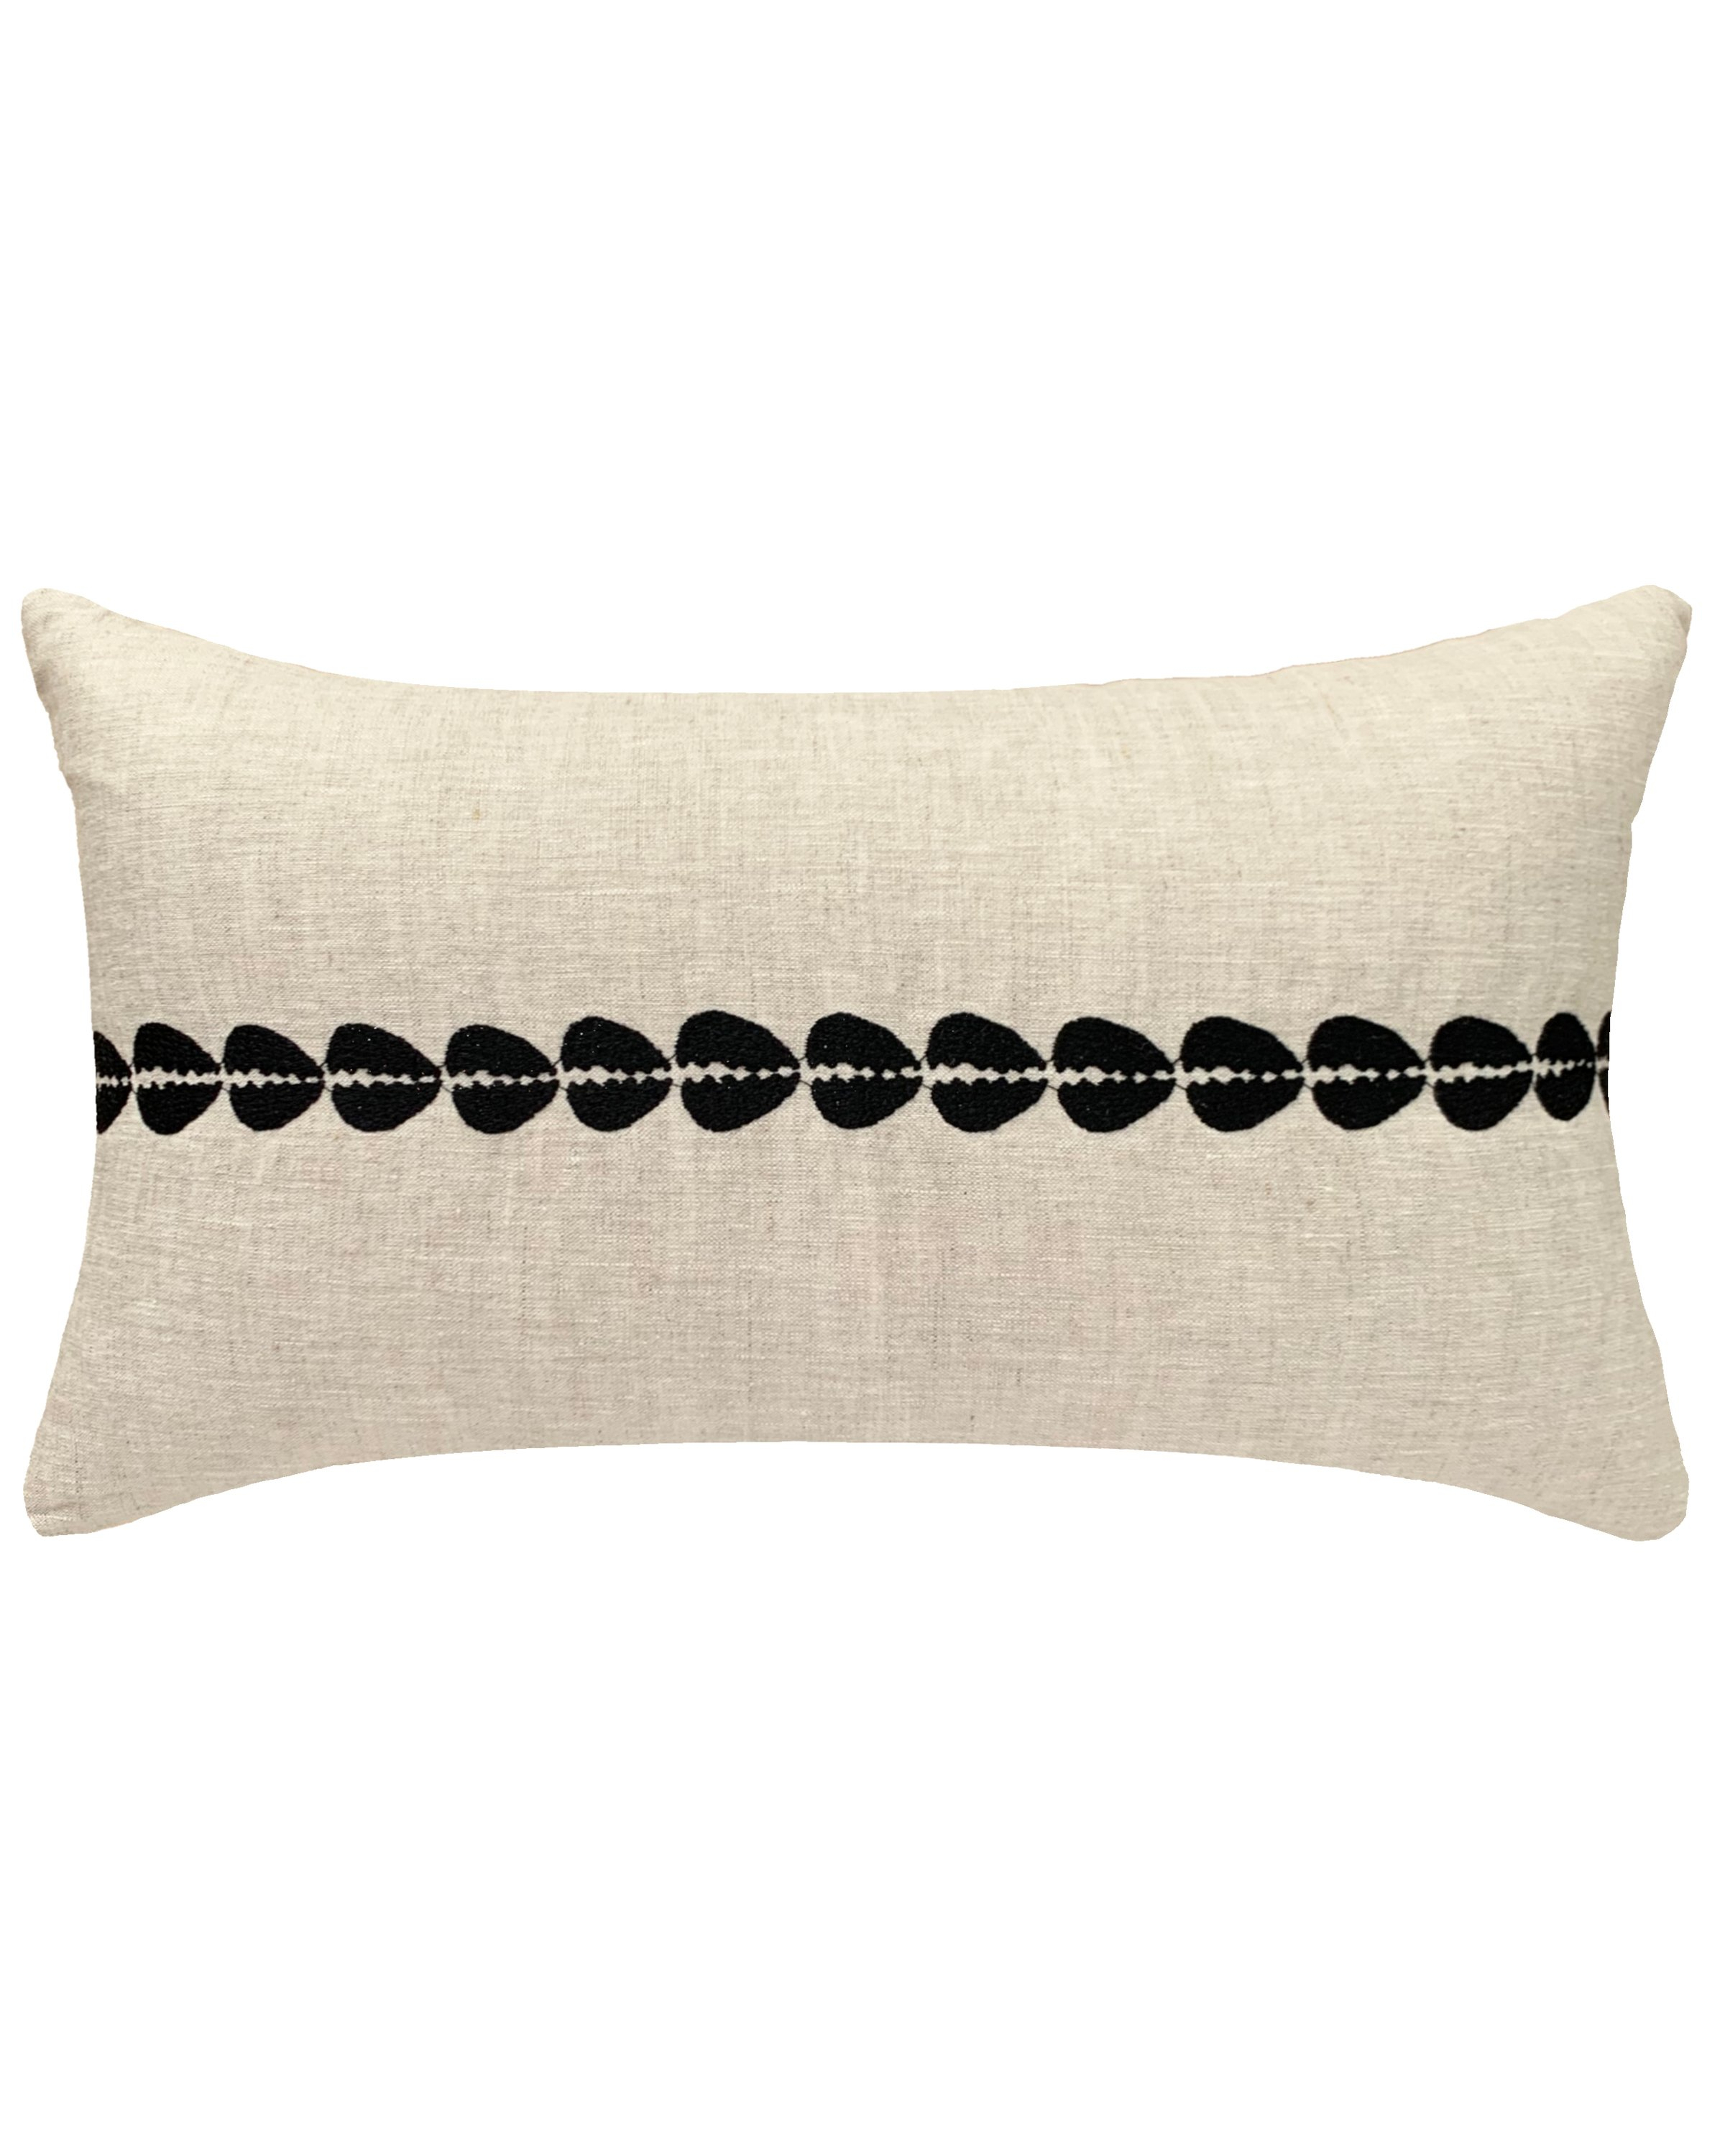 Cowrie Embroidered Lumbar Pillow, 20" x 12", Black & White - PillowPia